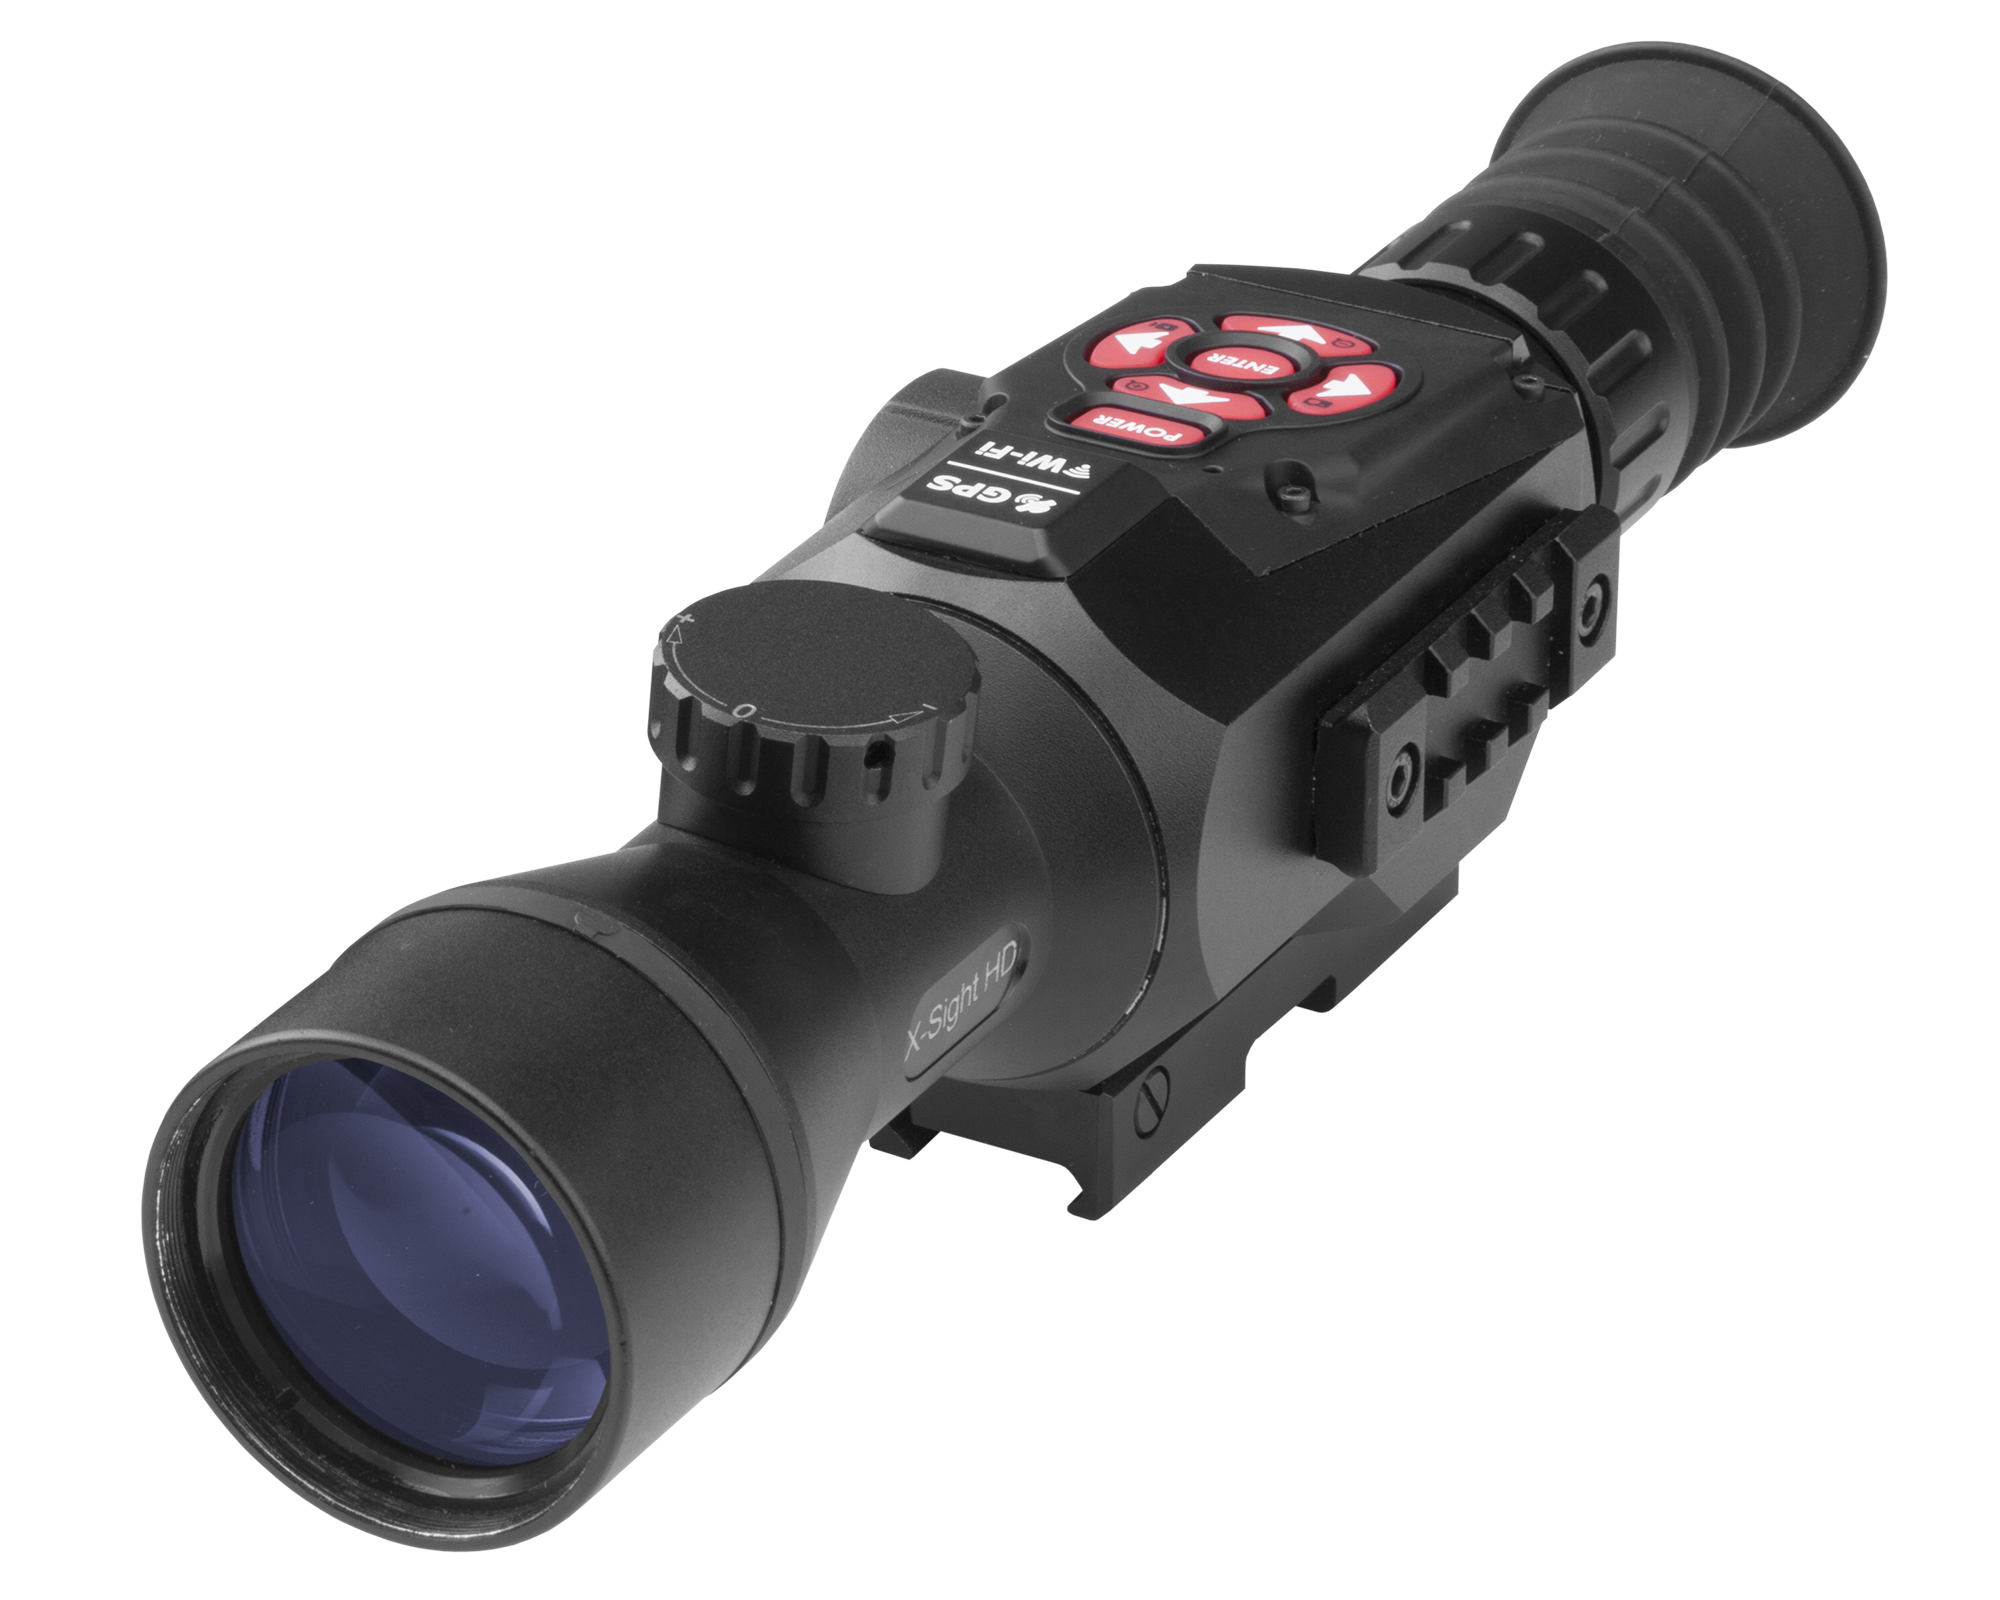 Atn Ps15 Night Vision Goggles/binoculars2 Models